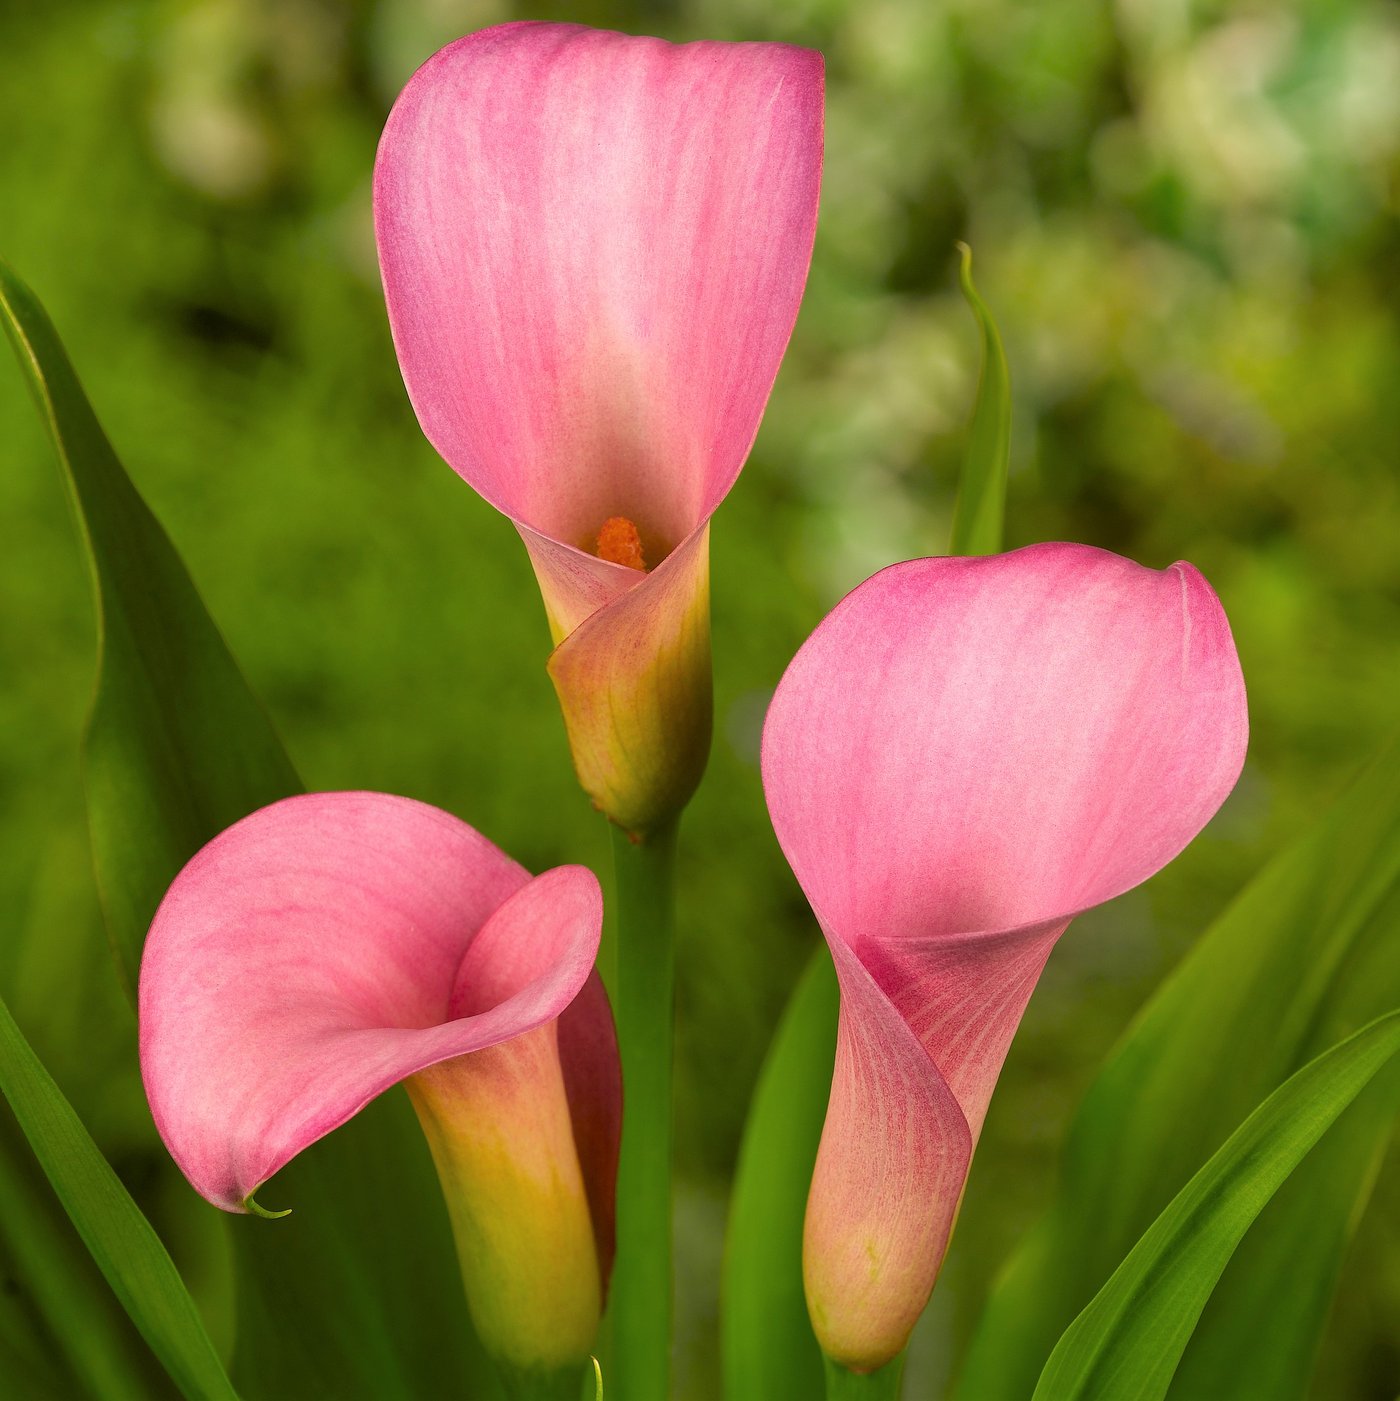 Calla Lily Bulbs For Sale Online – Easy To Grow Bulbs